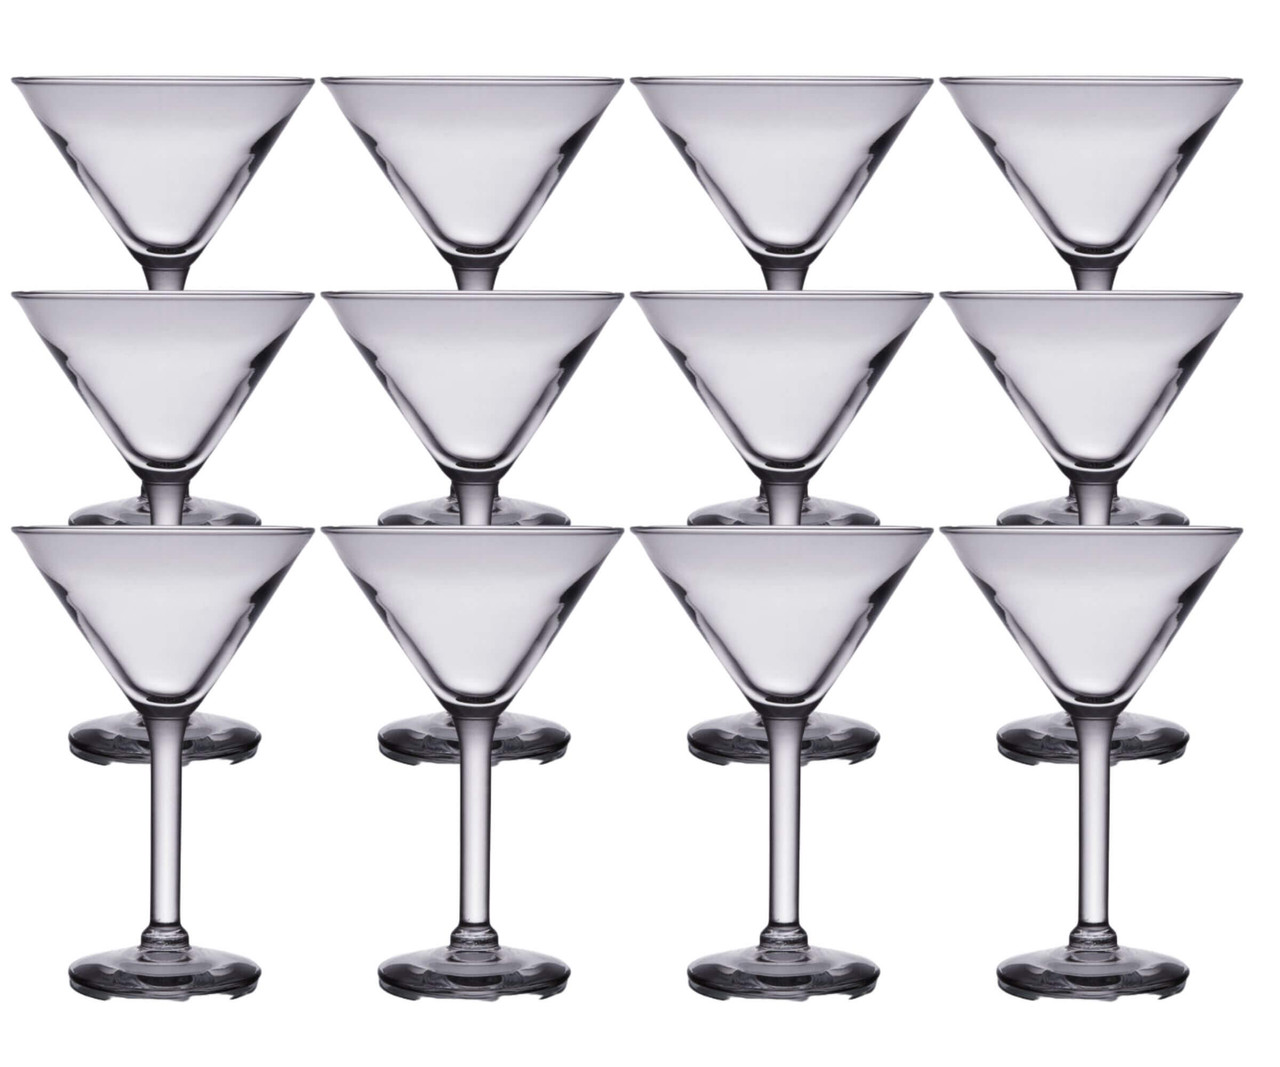 Libbey Embassy 5 oz. Martini Glass - 36/Case